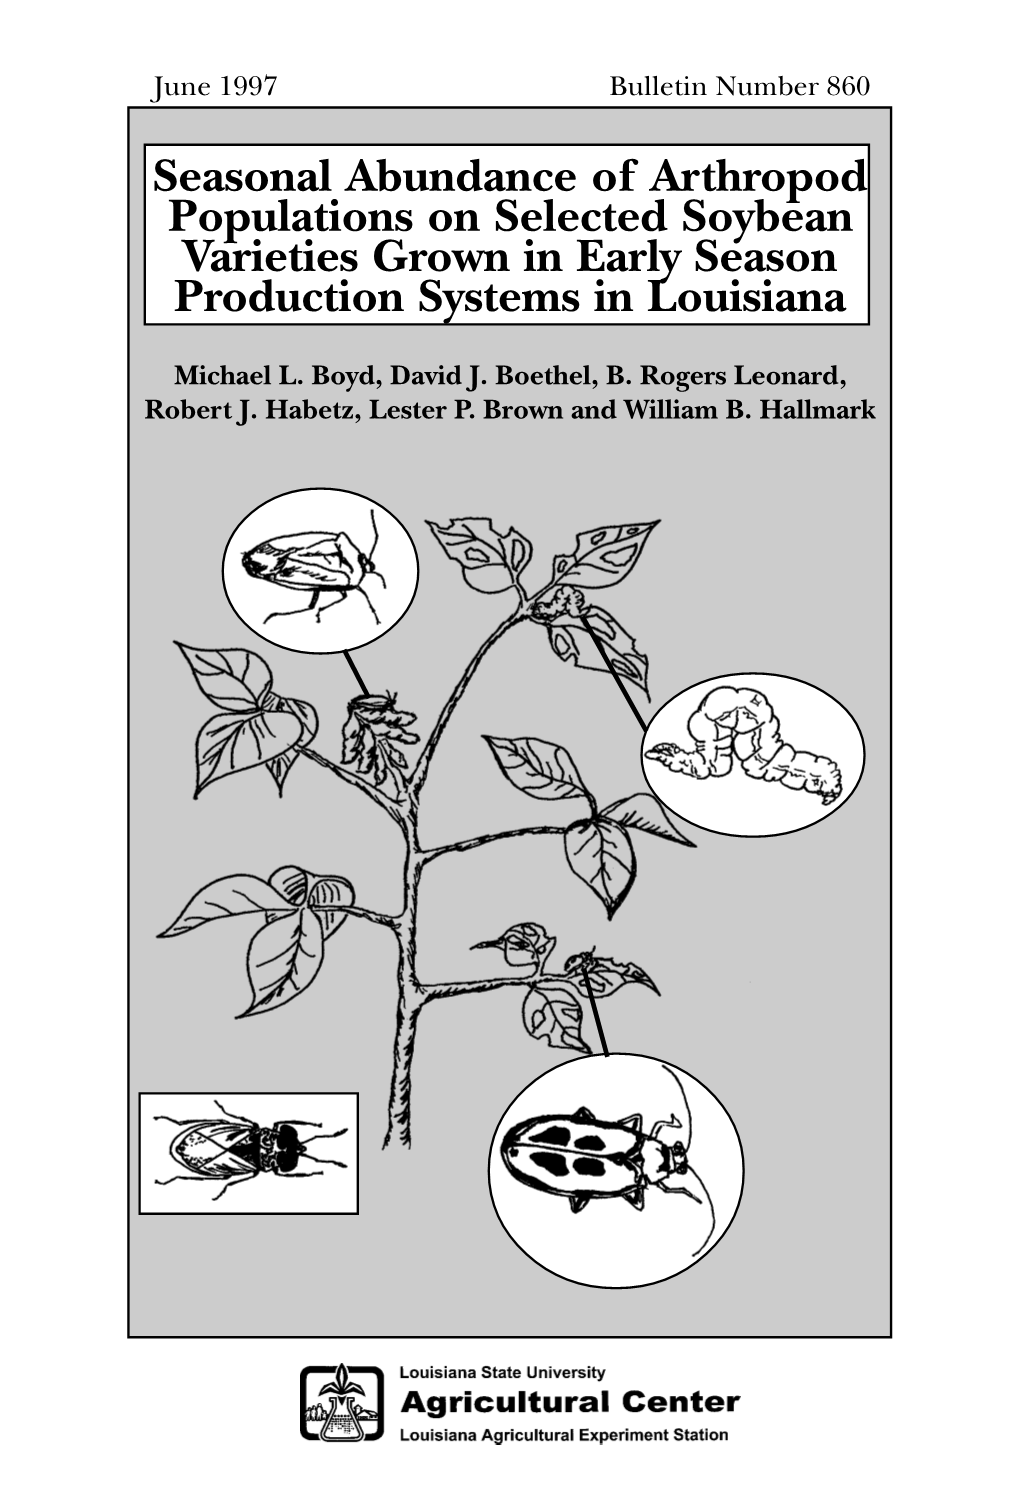 Anthropod Populations on Soybean Varieties